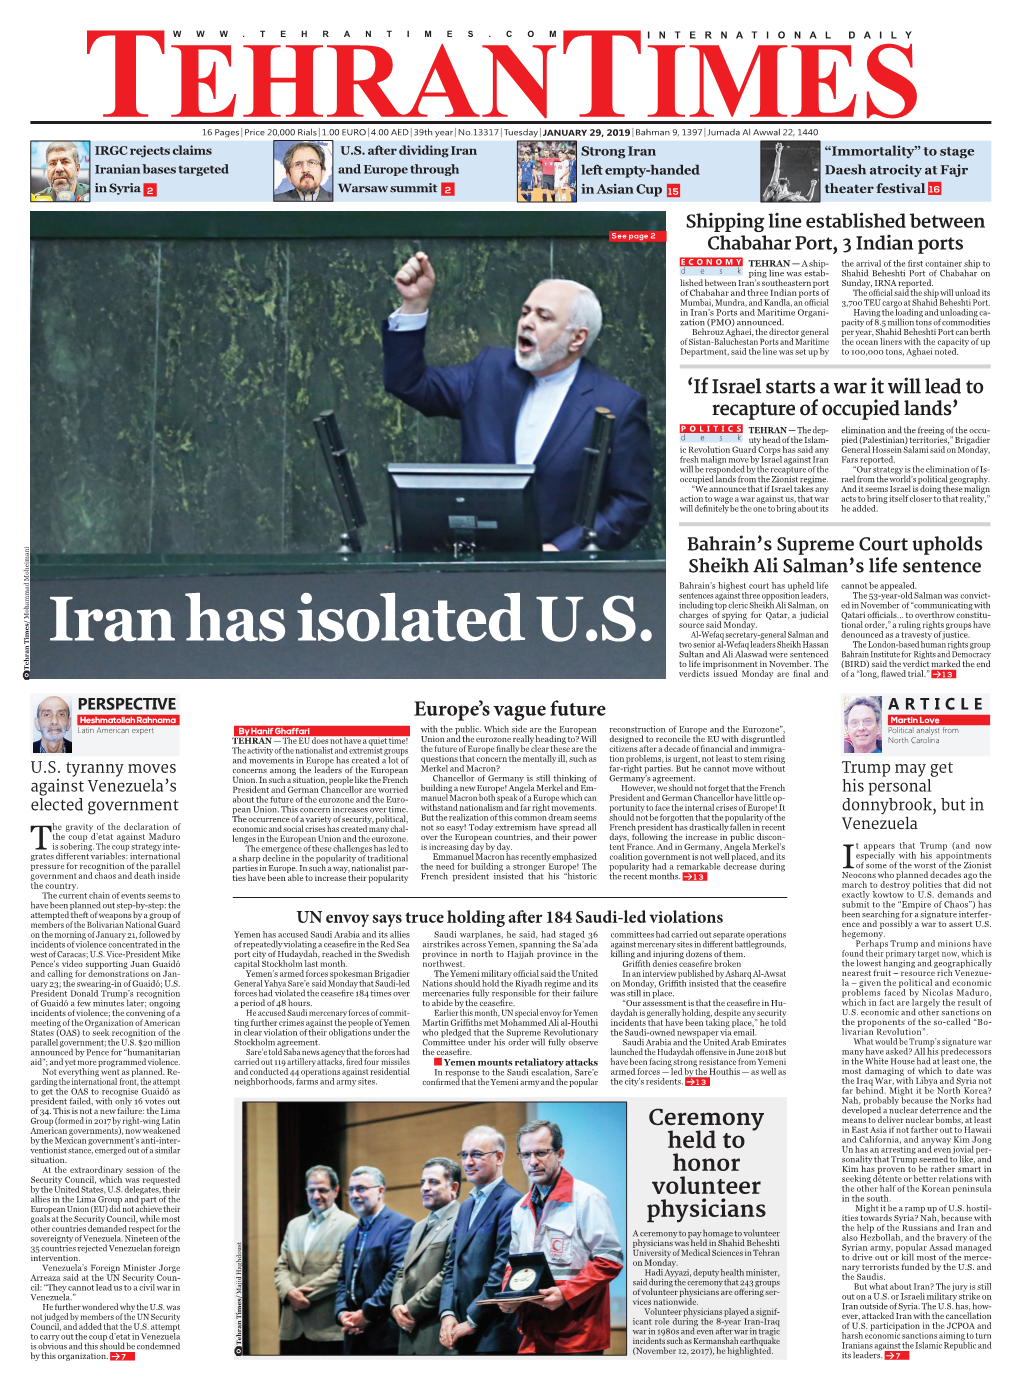 Iran Has Isolated U.S